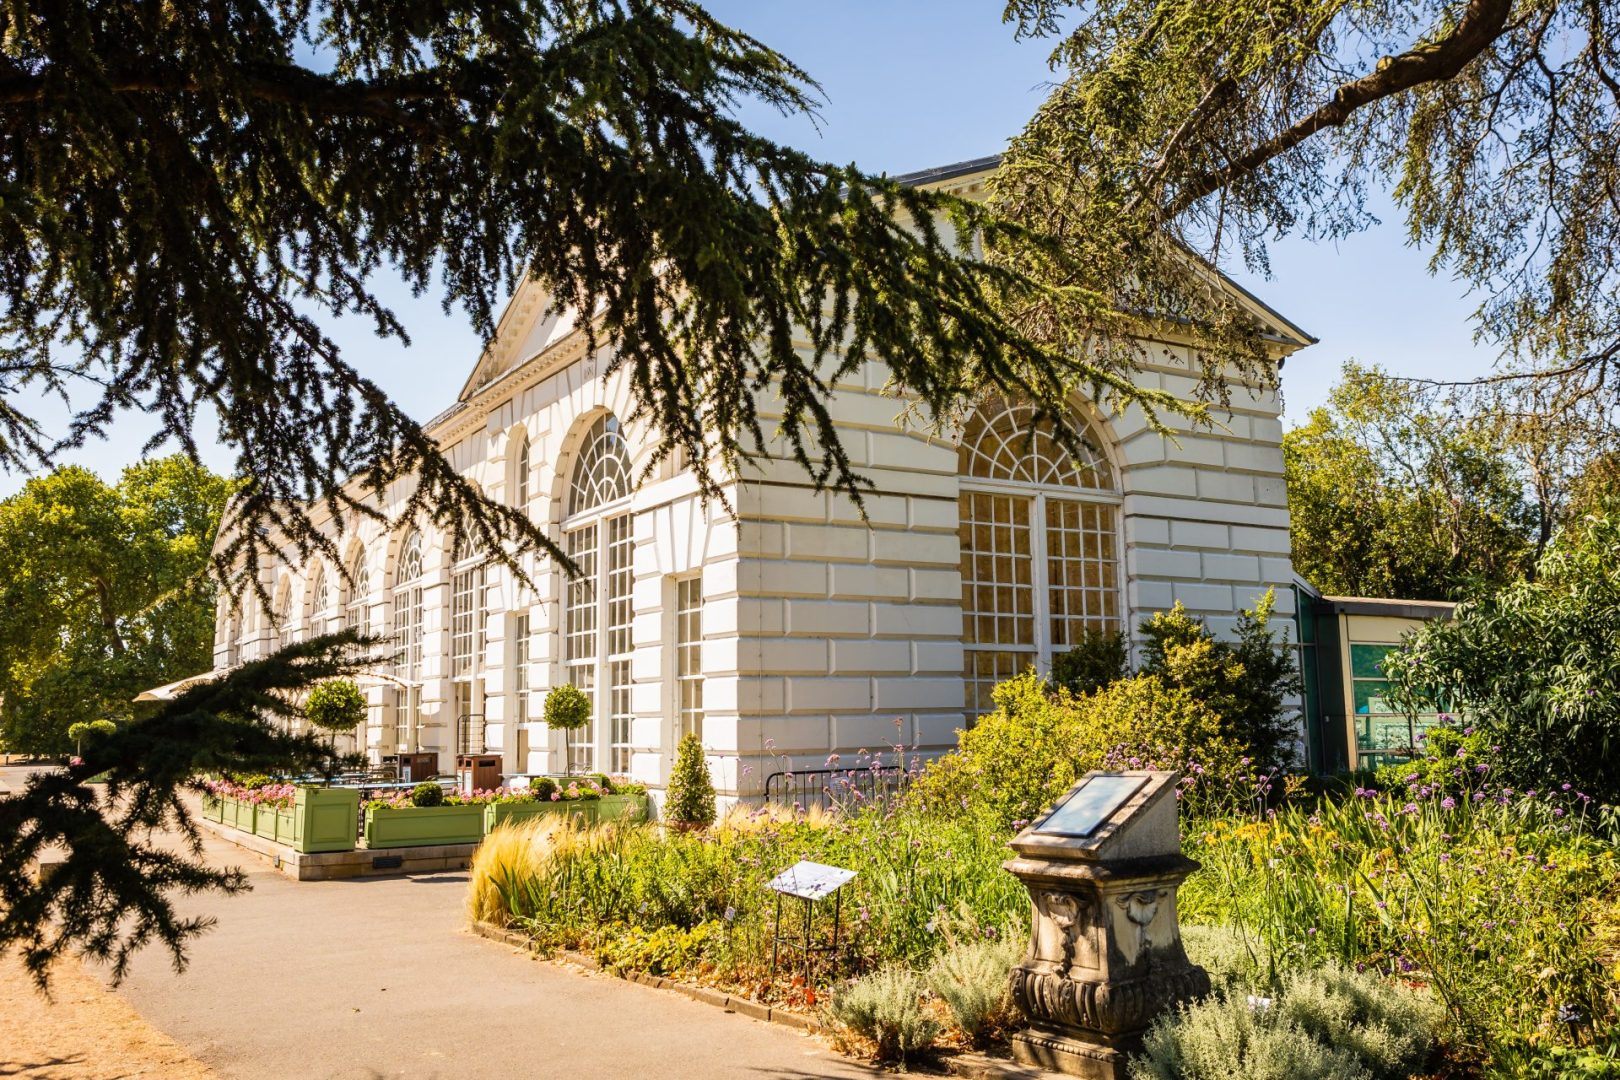 Exterior image of the orangery at Kew Gardens